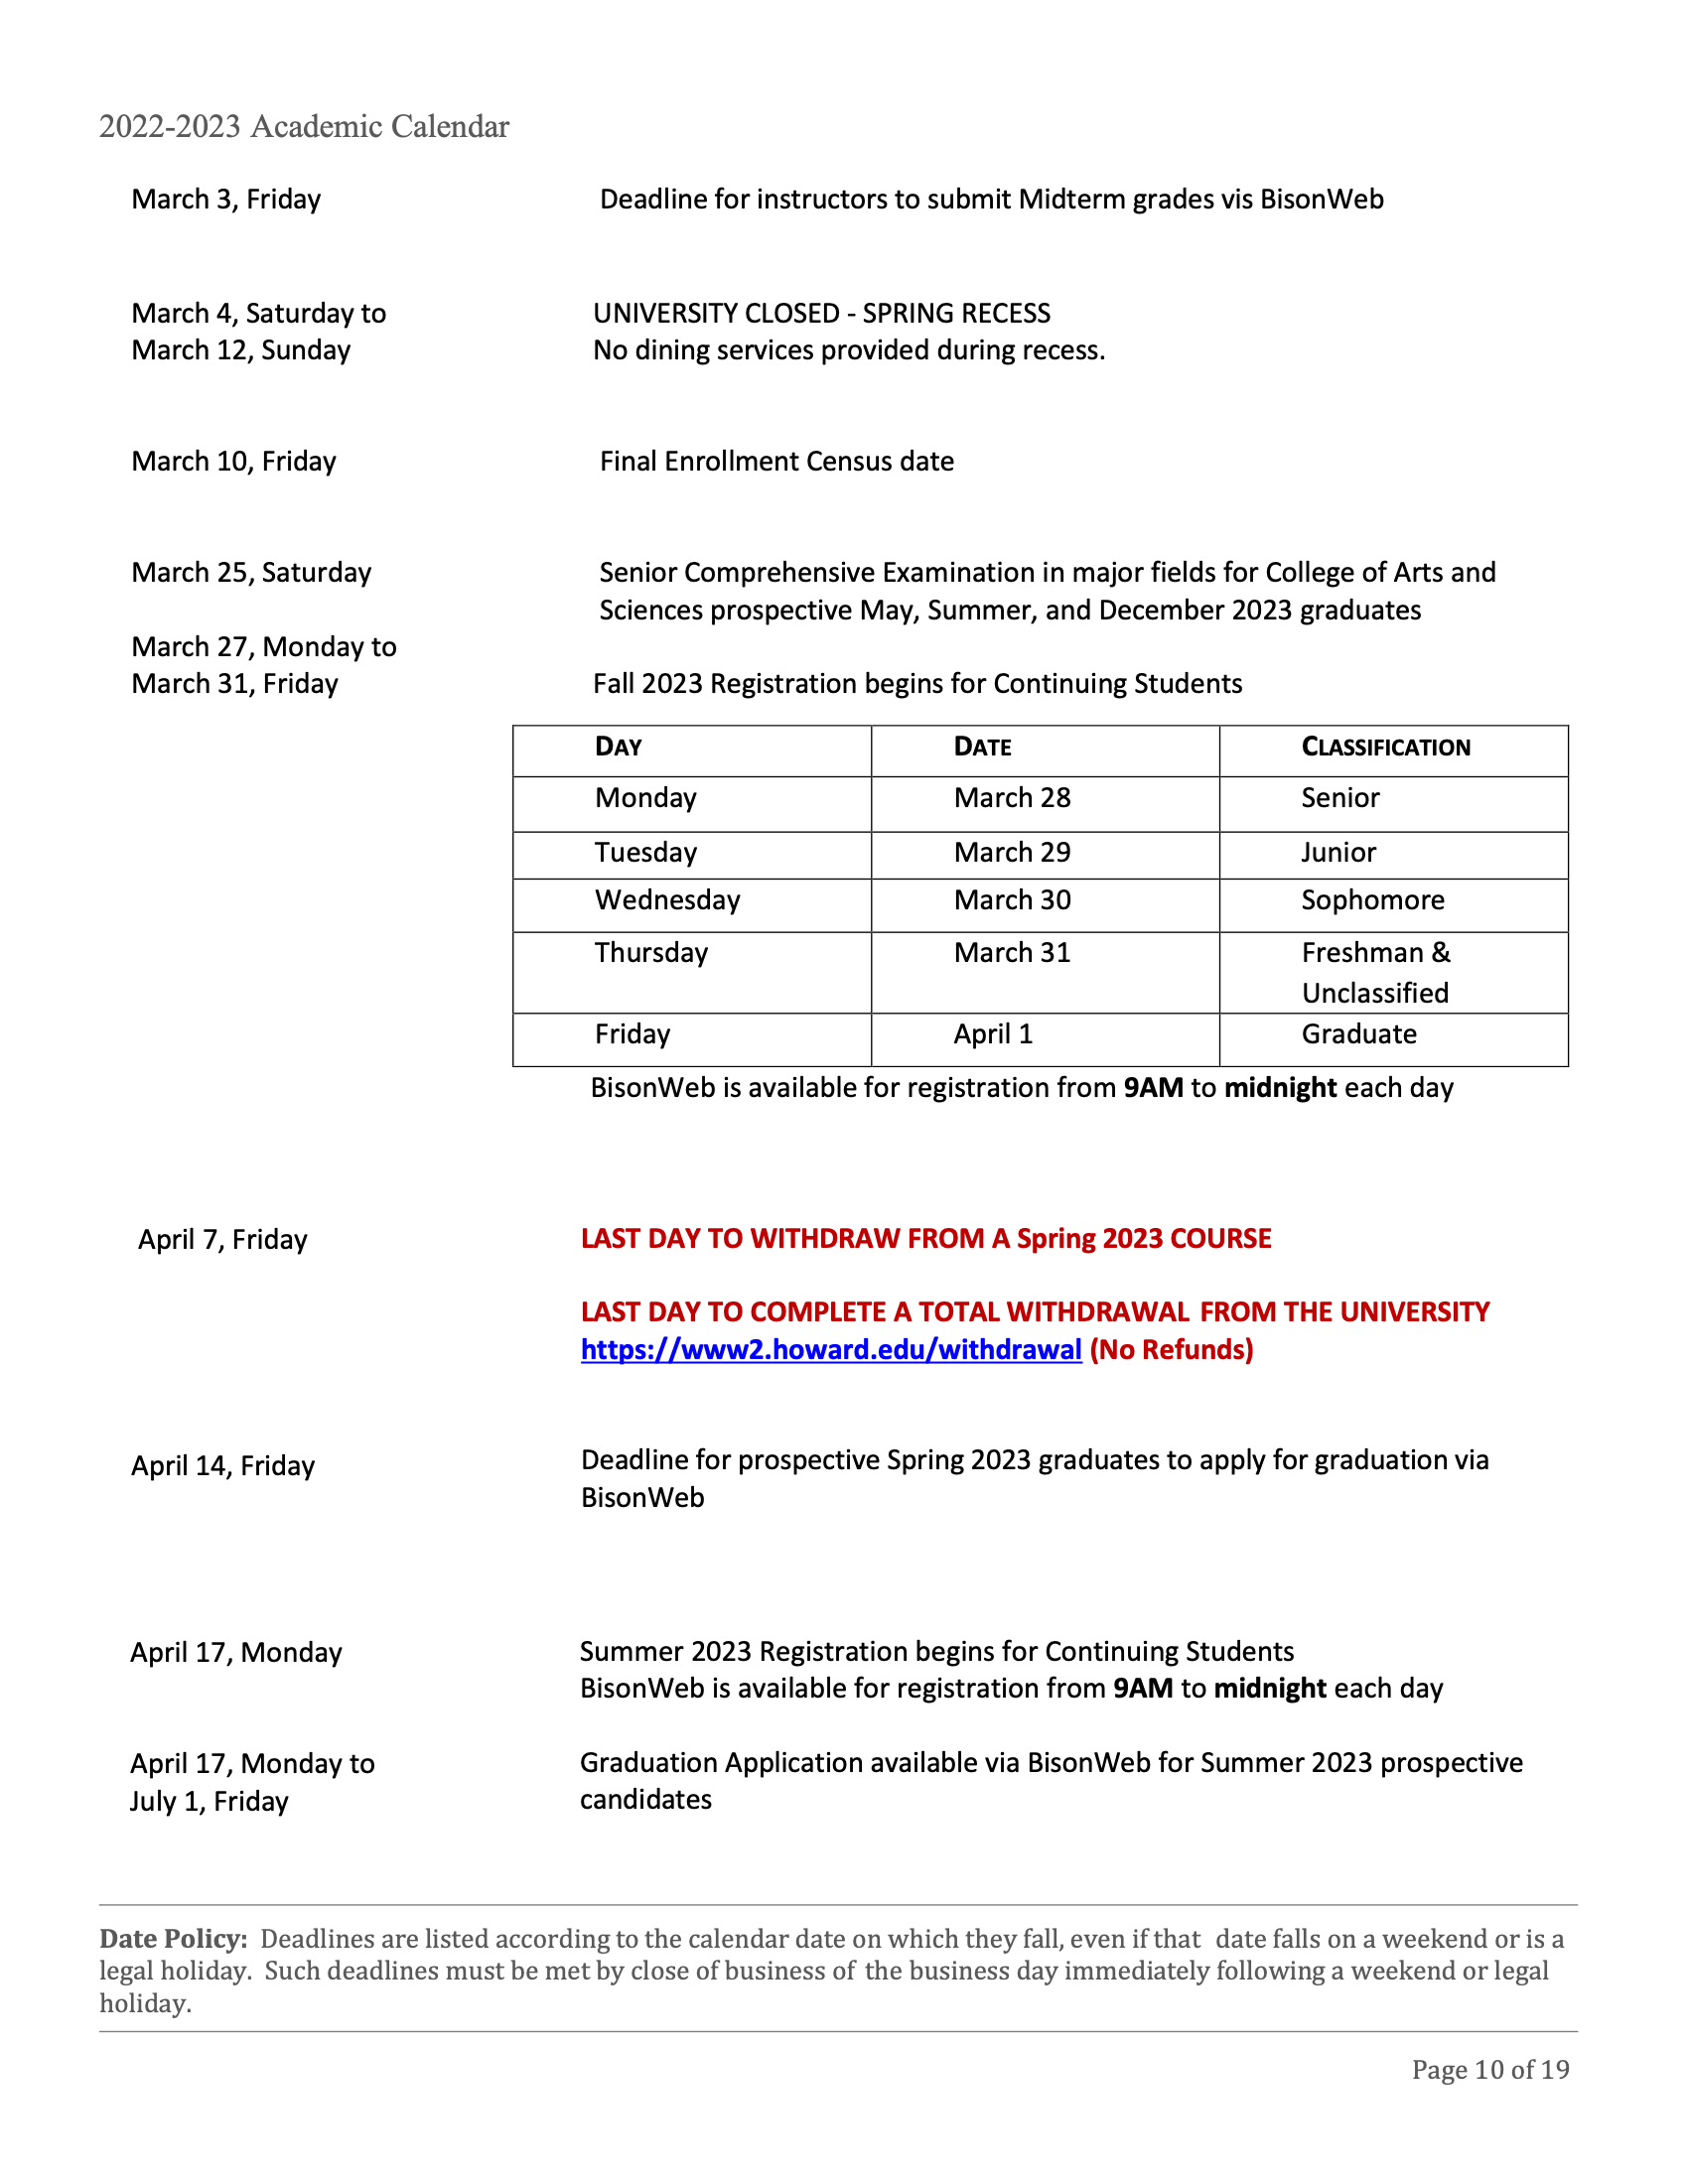 Academic Calendar 22-23 | Howard University